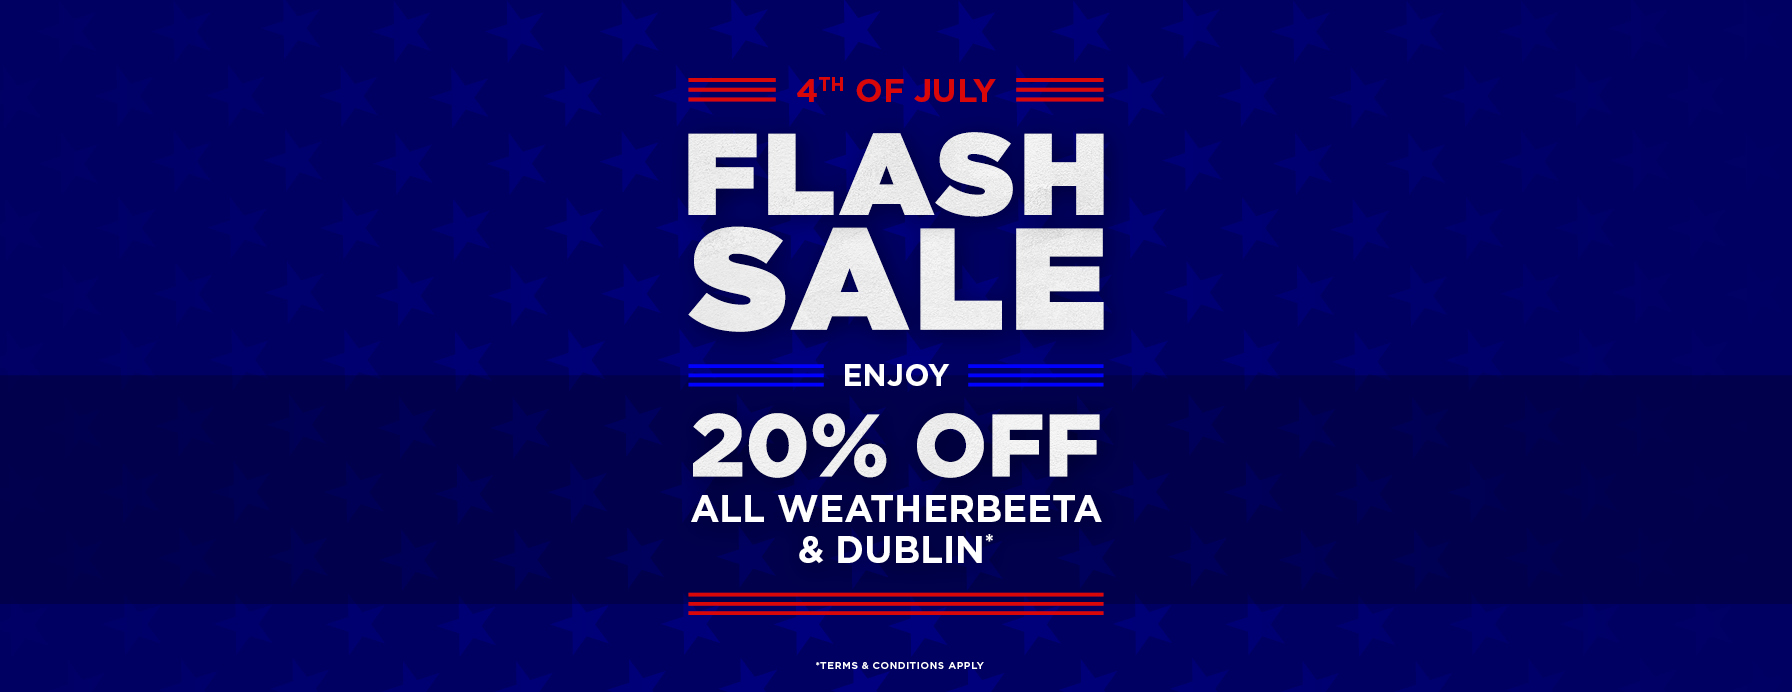 July 4th Flash Sale